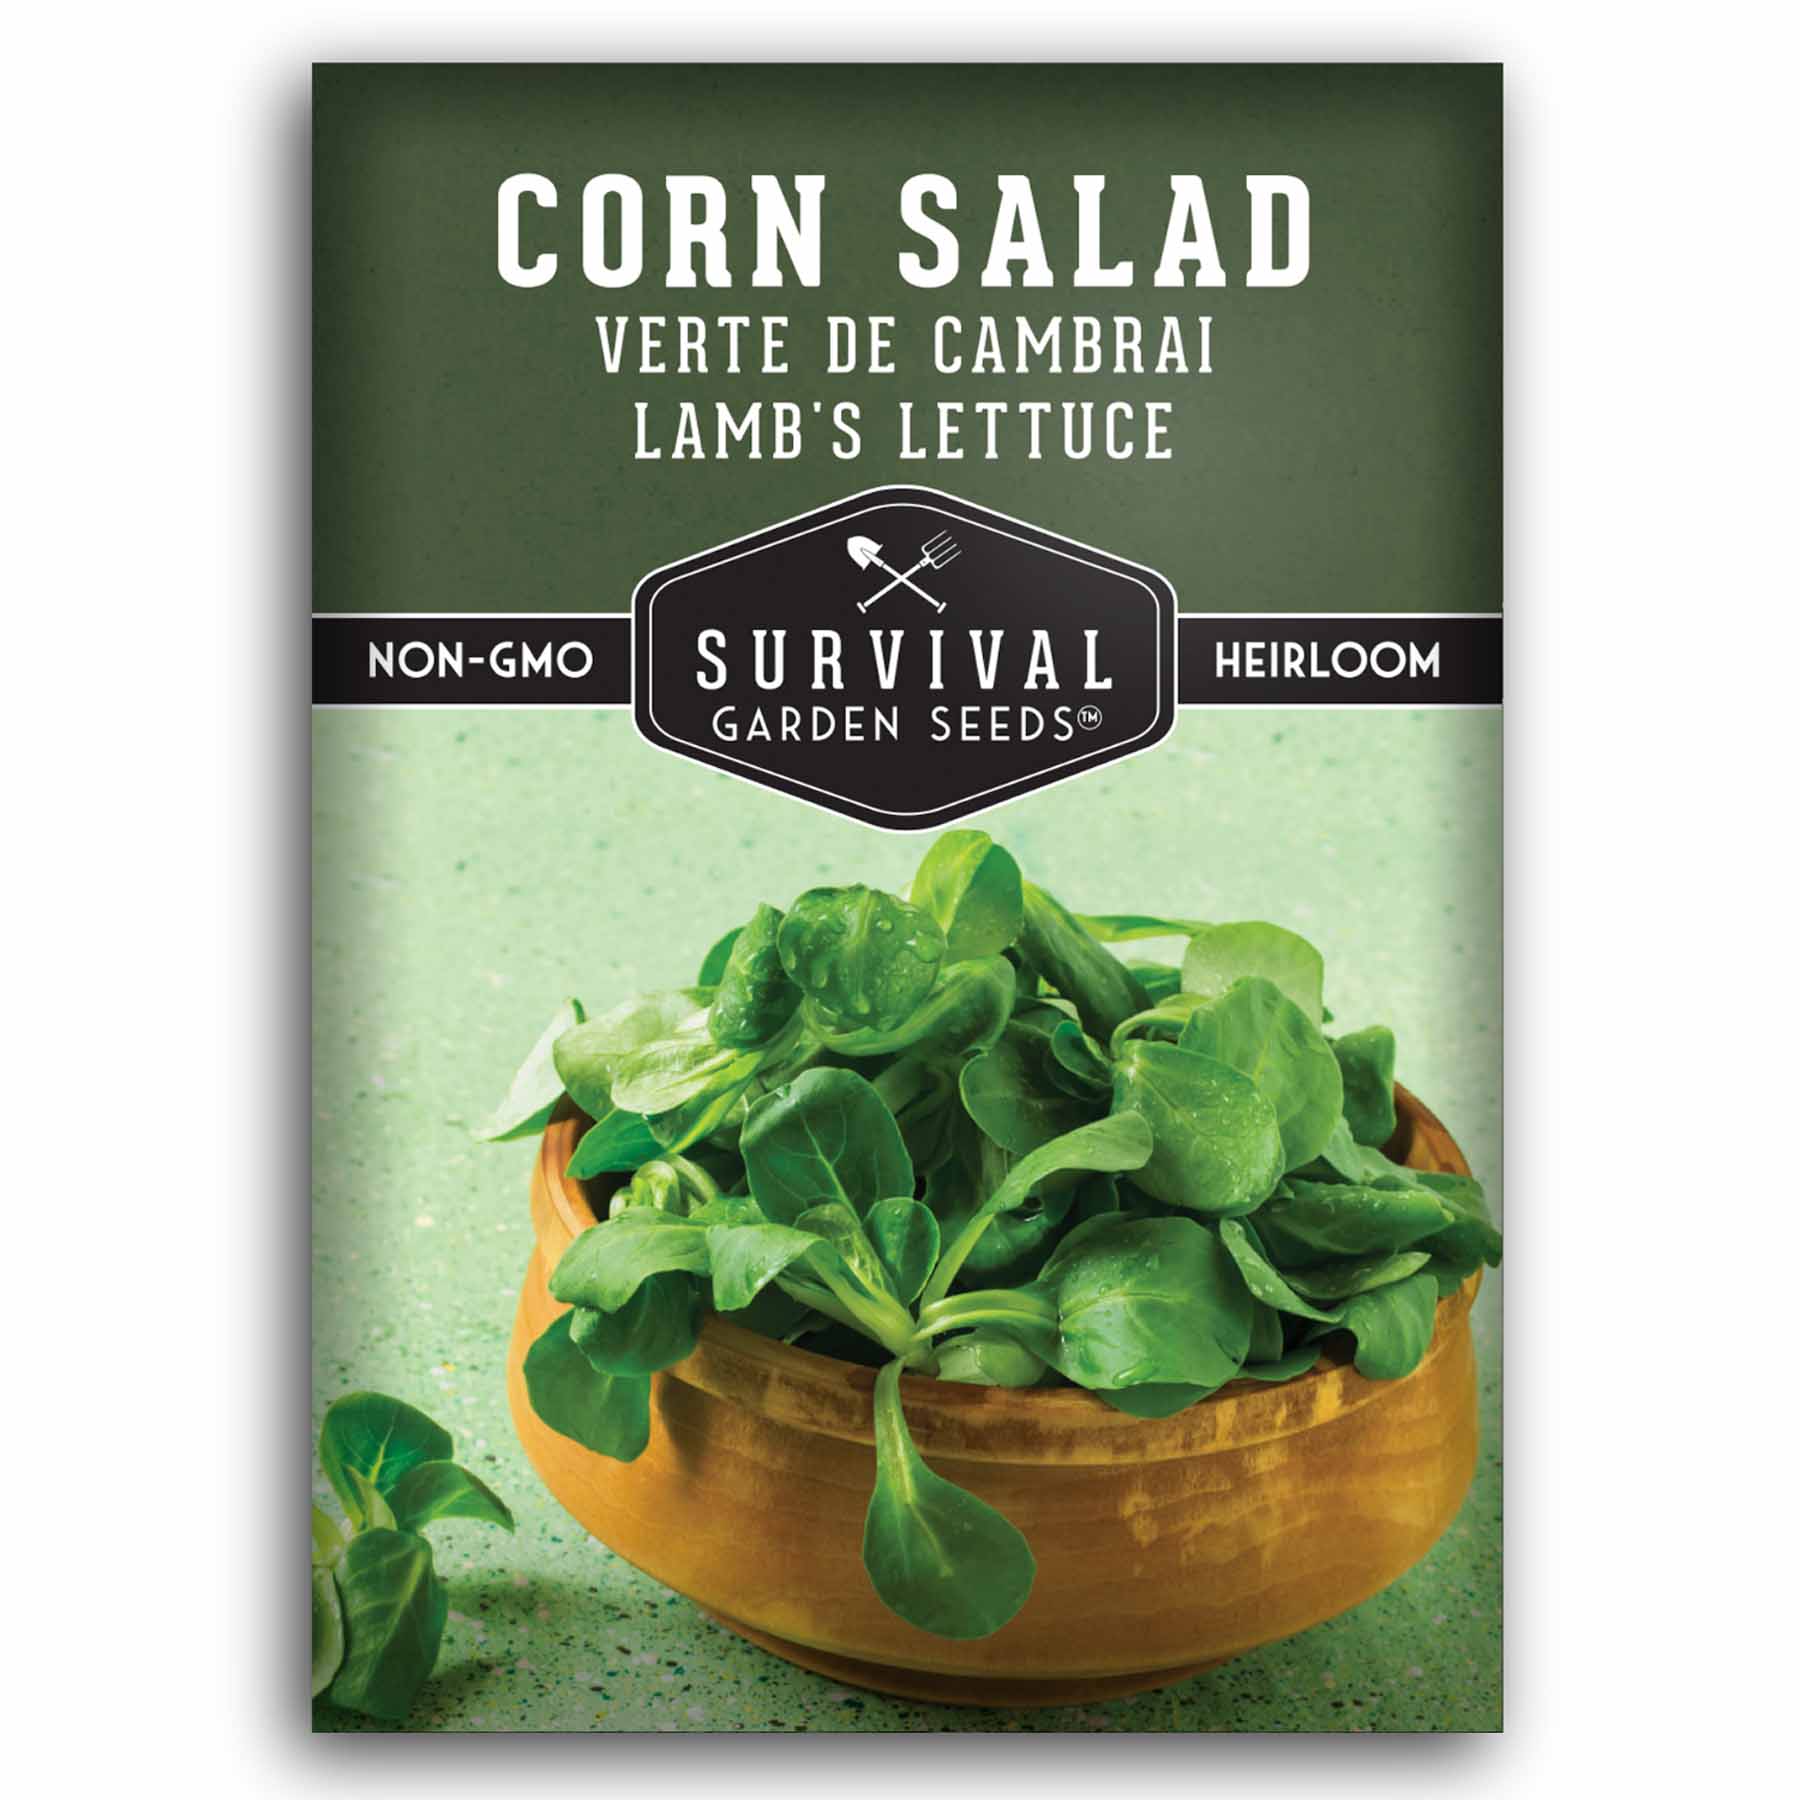 1 packet of Corn Salad Lamb's Lettuce seeds